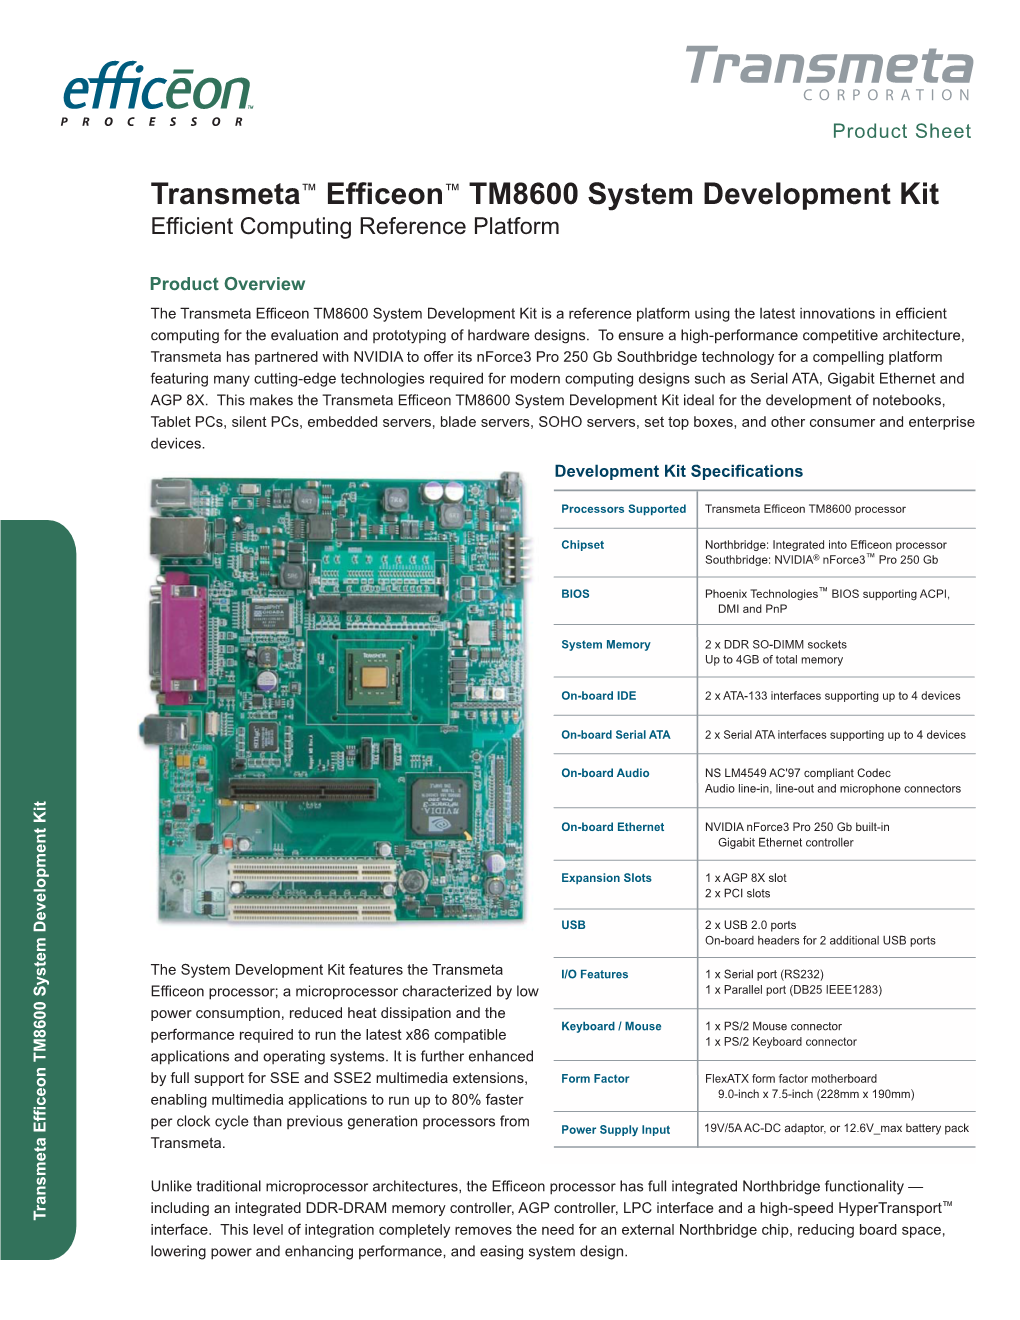 Transmeta™ Efficeon™ TM8600 System Development